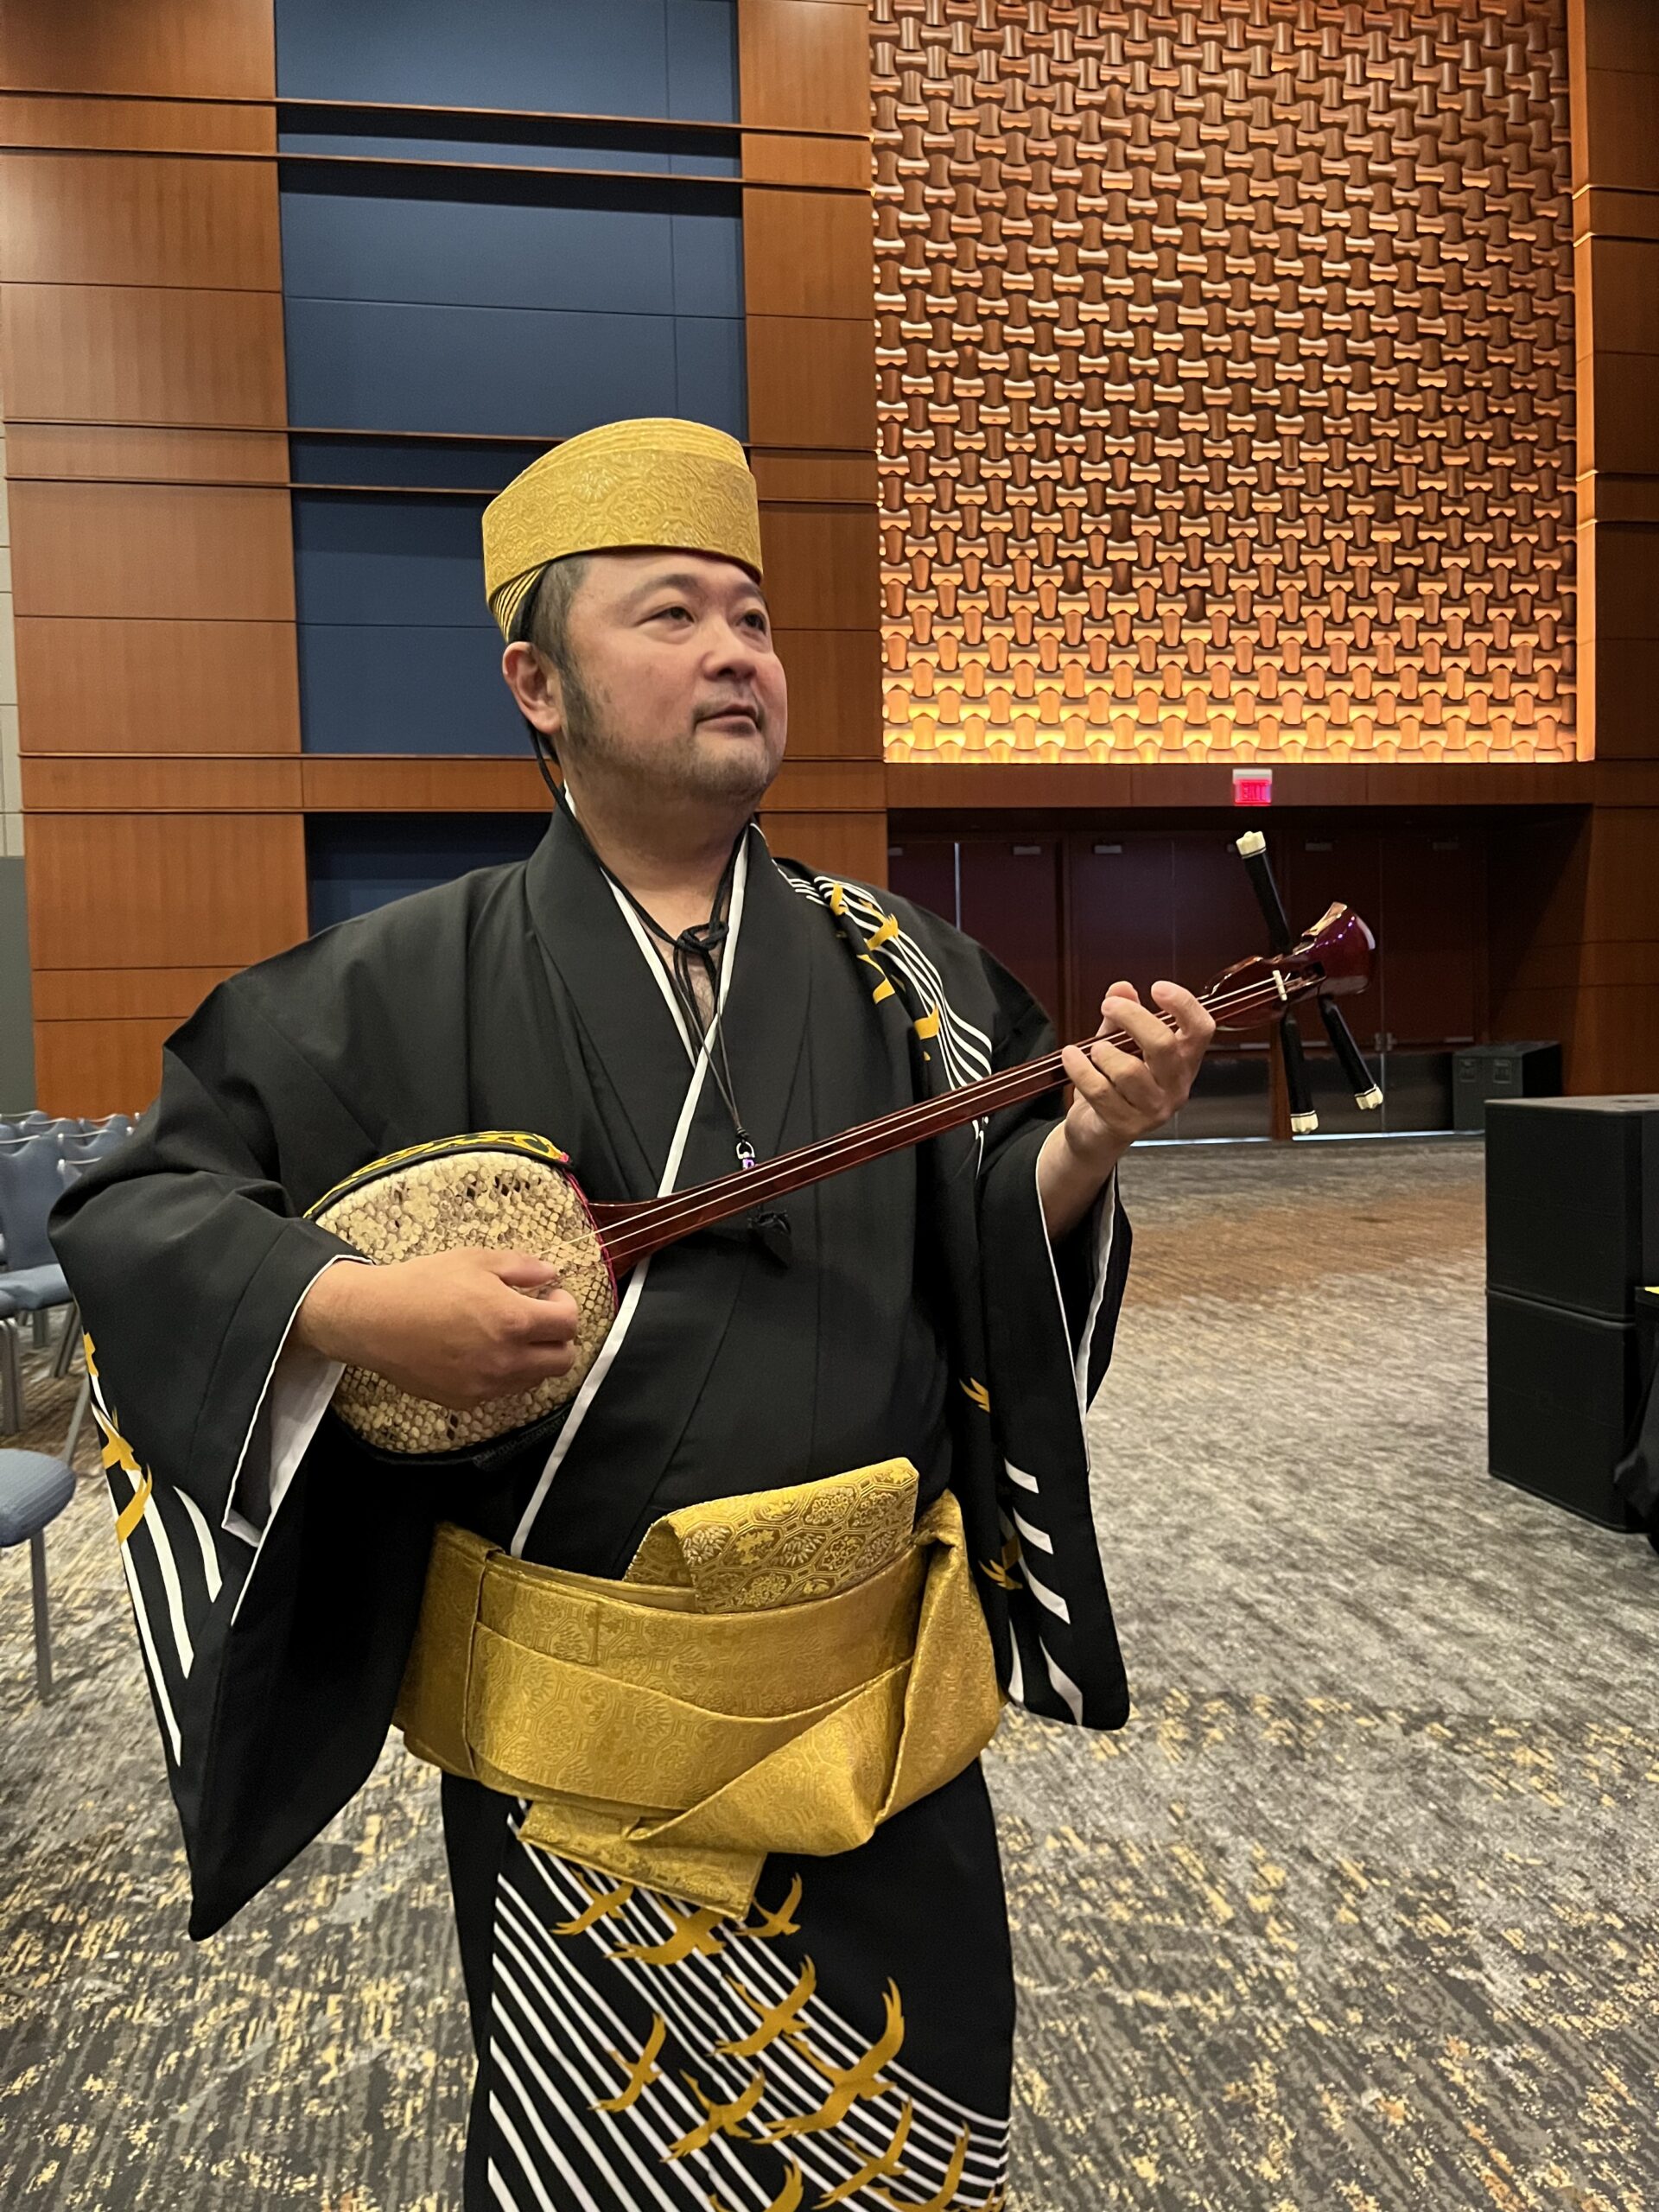 Kaizan Nitta wearing traditional Japanese clothing and playing a sanshin